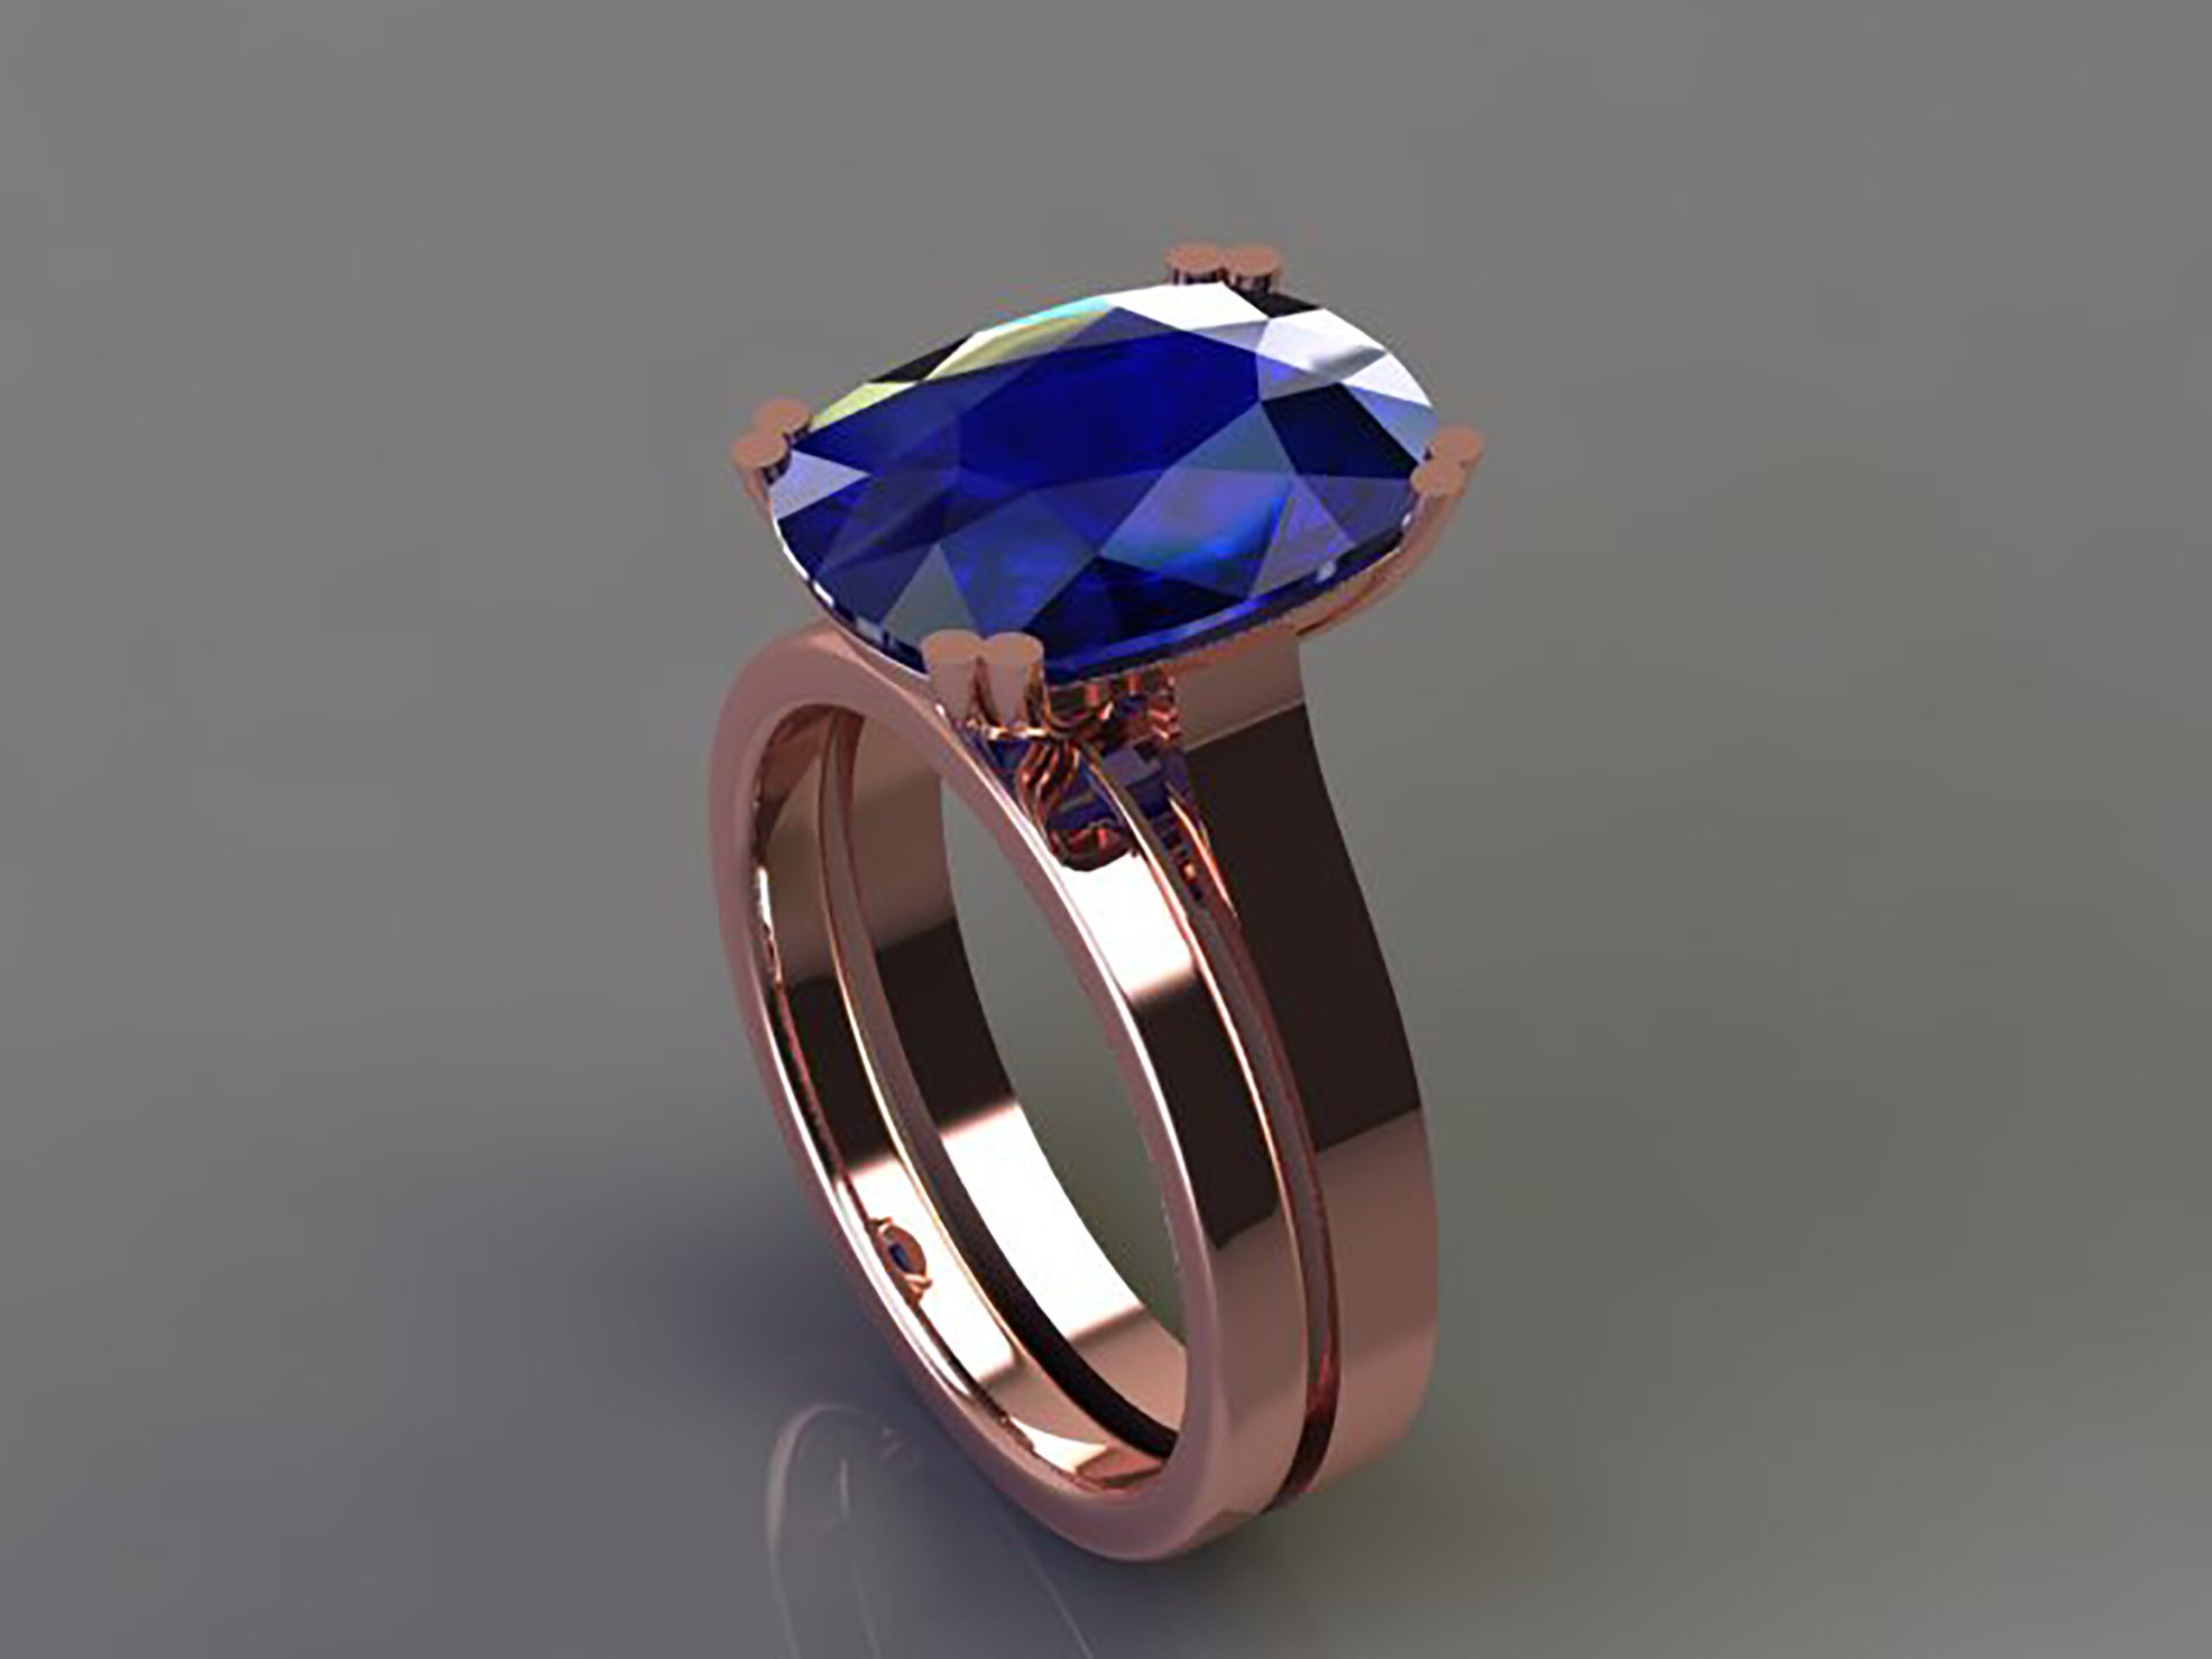 ronan campbell blue sapphire alternative engagement ring designyard contemporary jewellery gallery dublin ireland bespoke